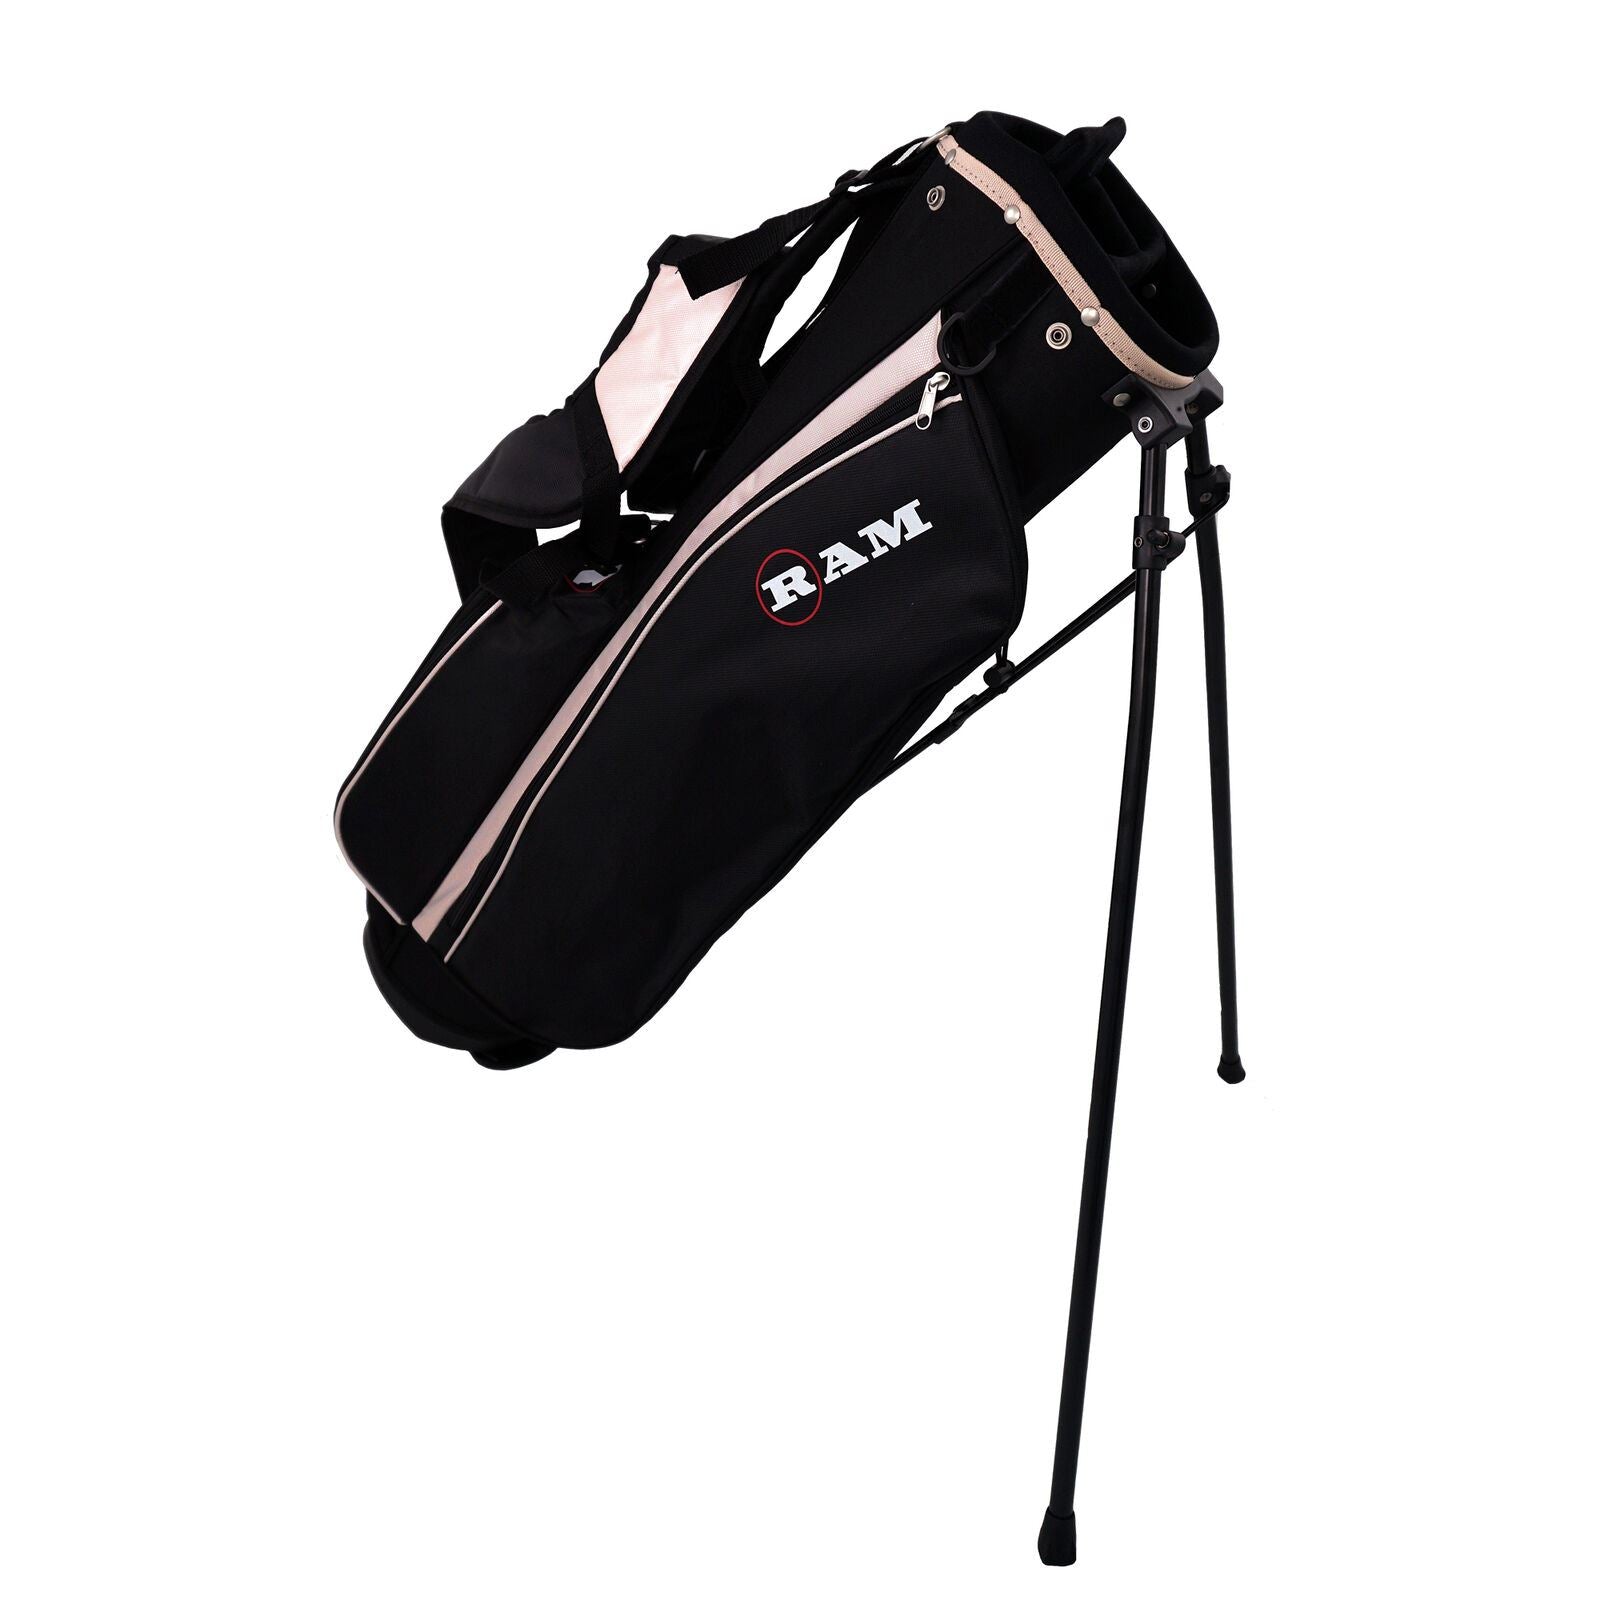 Ram Golf SGS Ladies Right Hand Golf Clubs Starter Set w/ Stand Bag -Steel Shafts